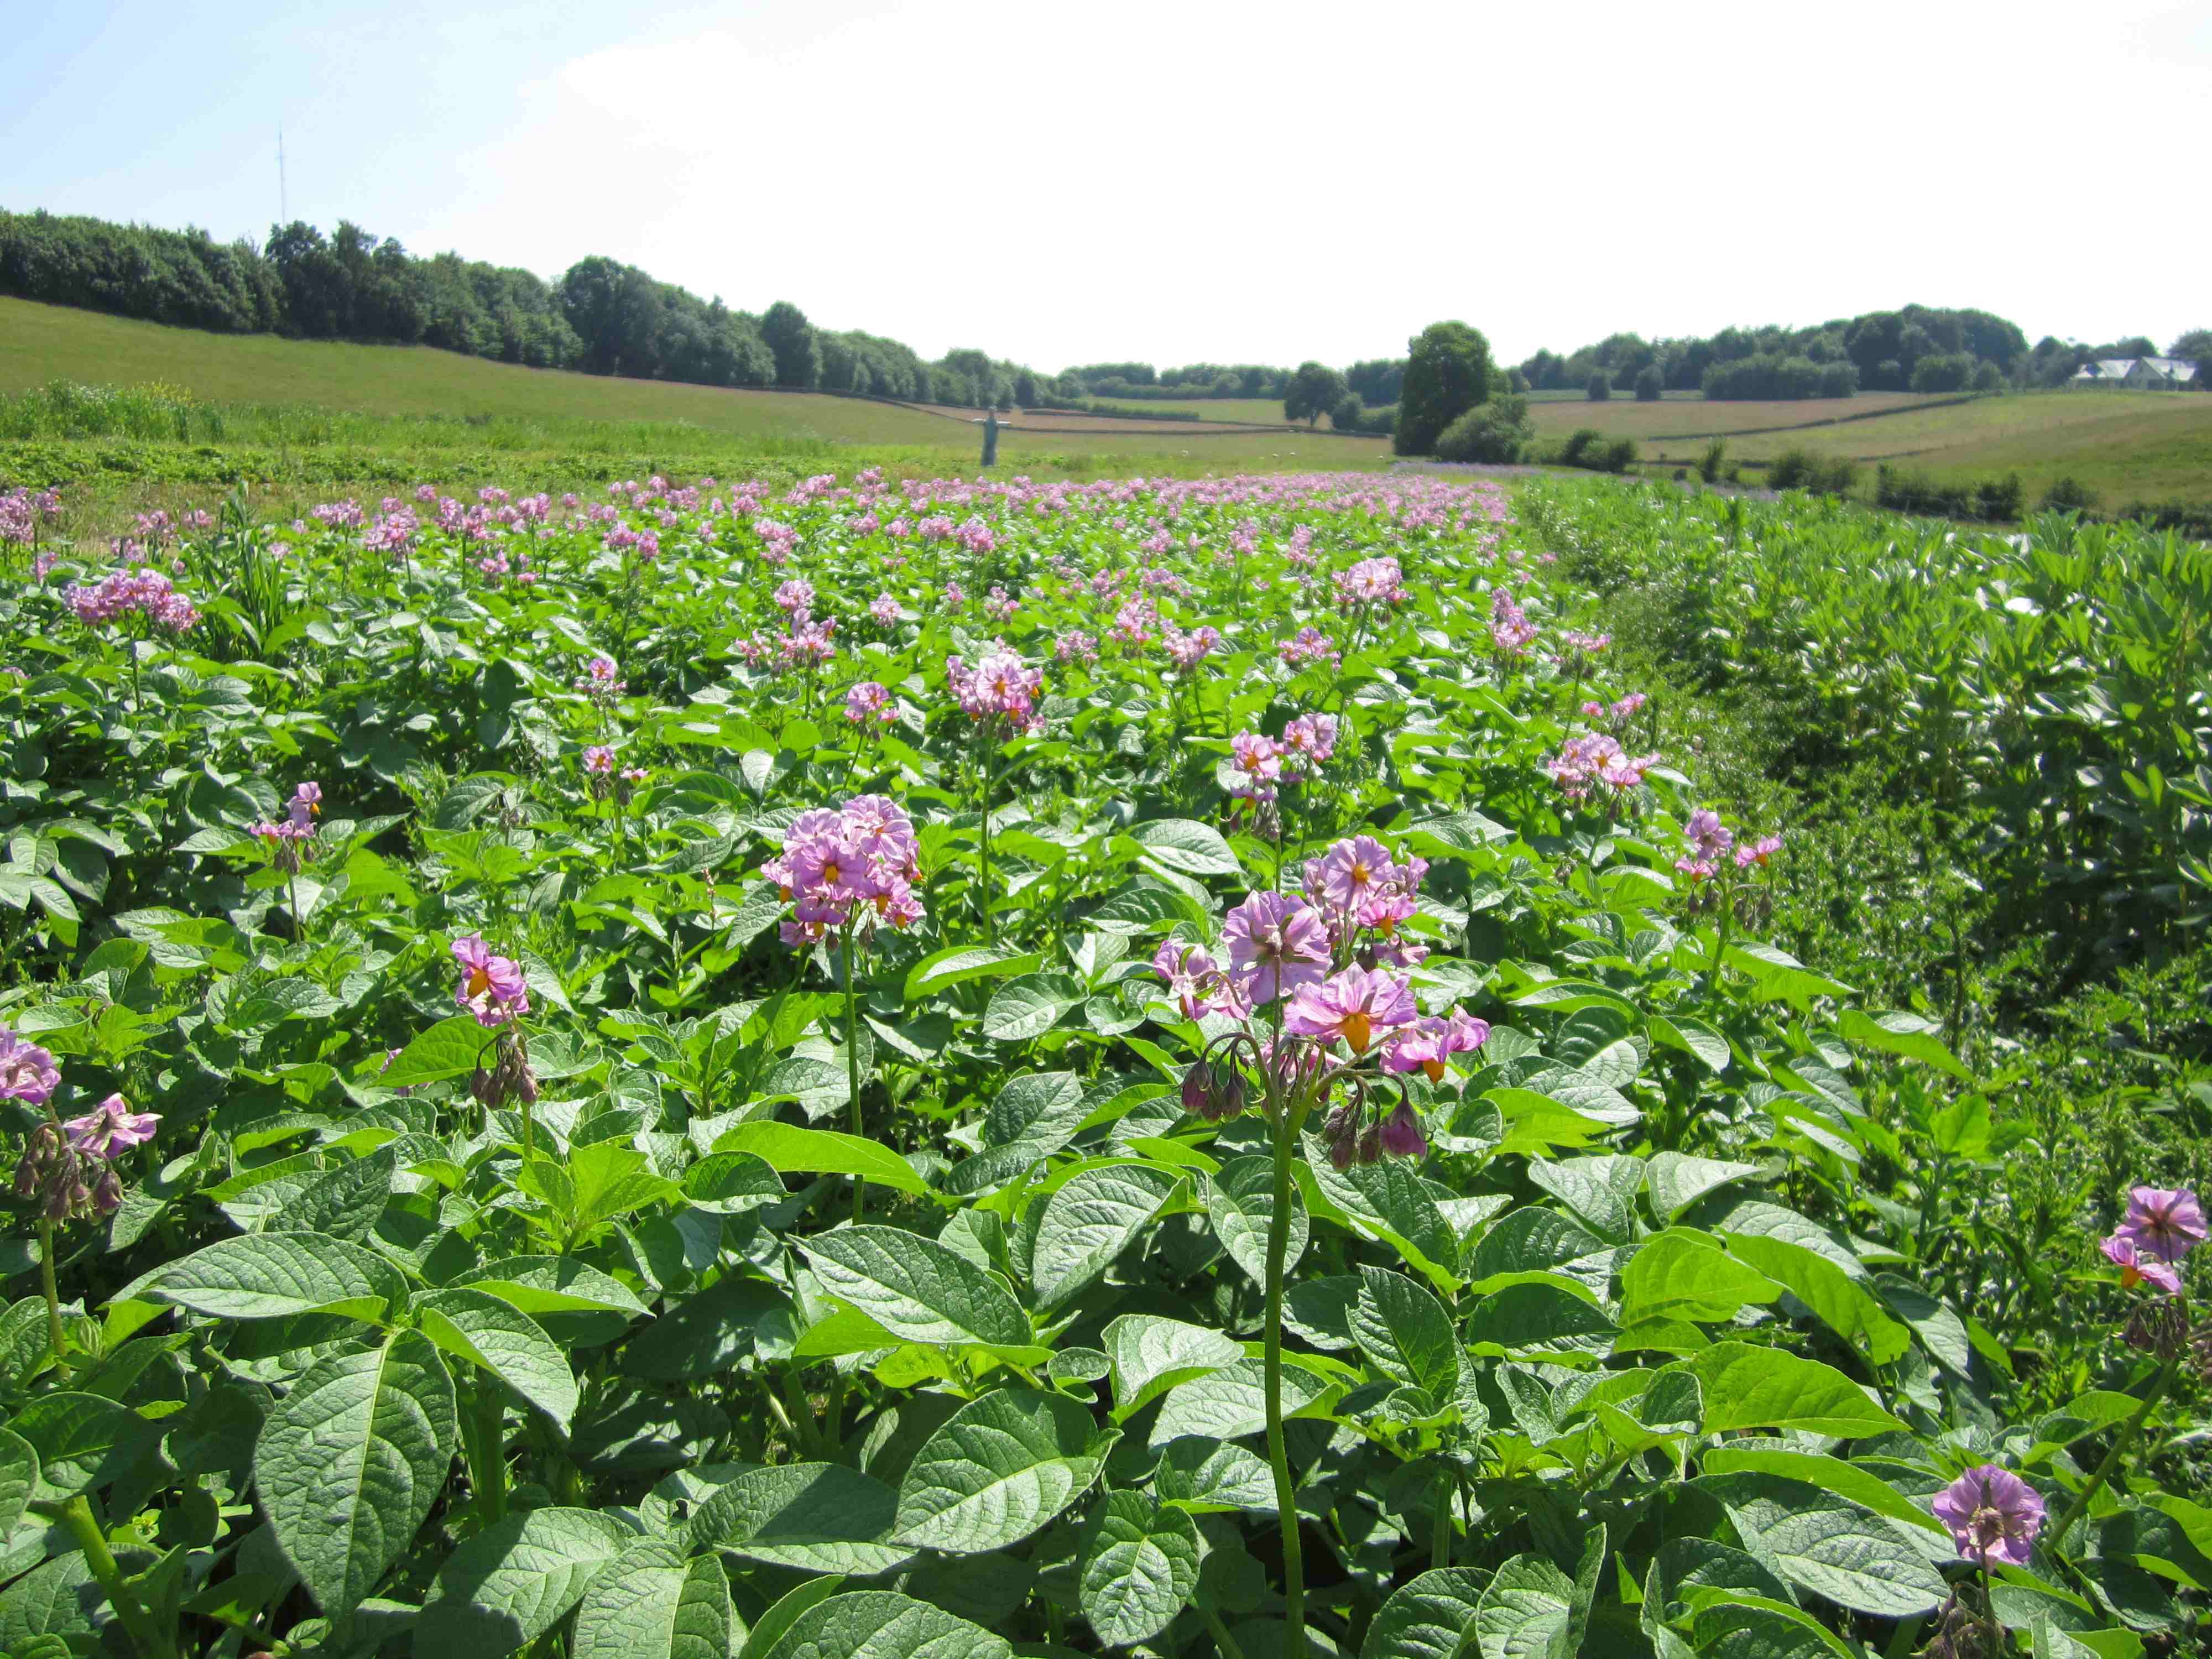 Kendal Strawberry Field - potato flowers